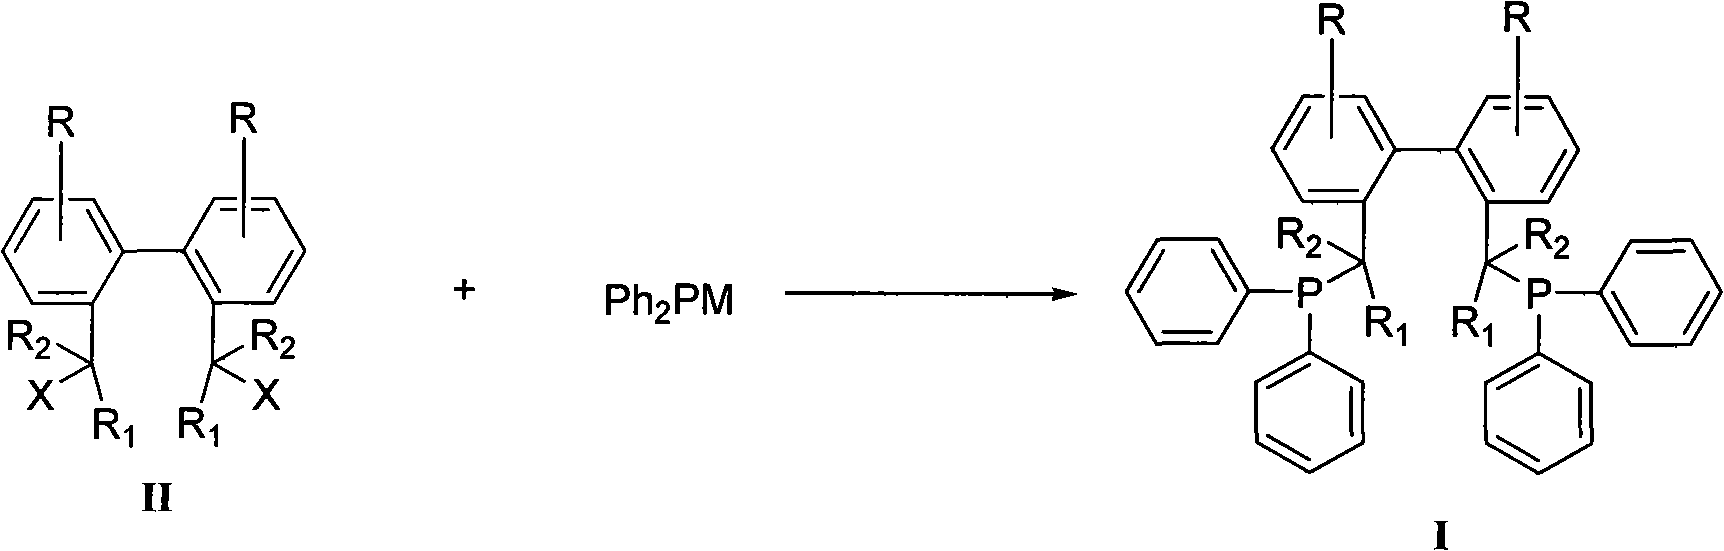 Method for preparing biphenyl diphosphine ligand